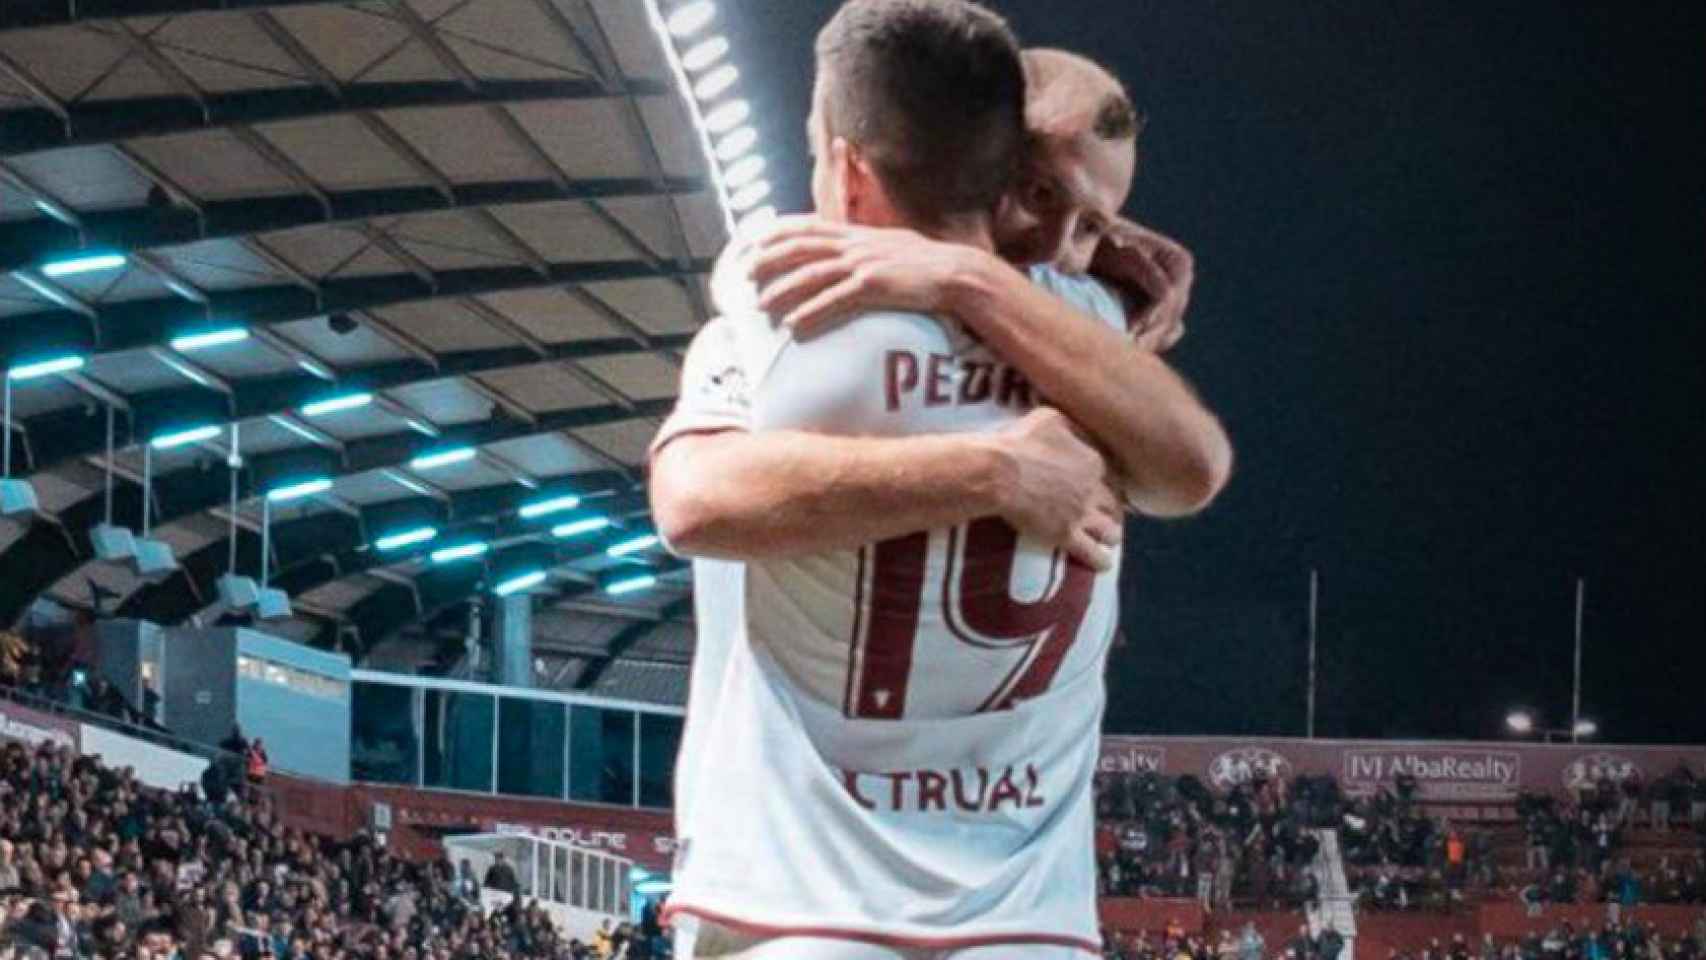 Zozulya celebra junto a Pedro el gol del Albaceye